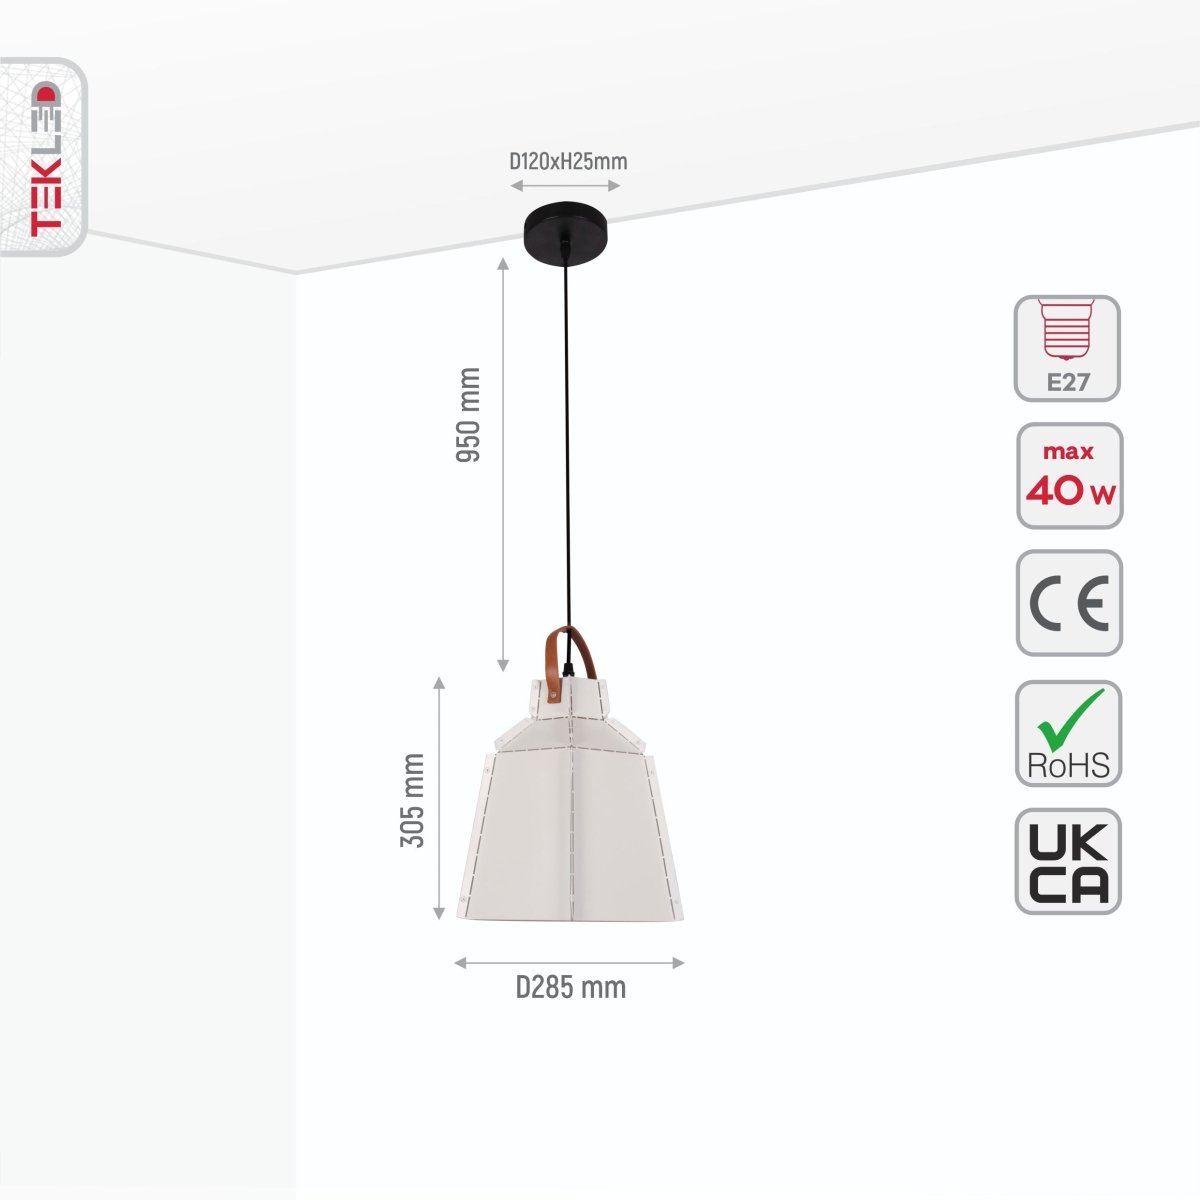 Size and specs of Esagono Mini White Metal Pendant Light with E27 Fitting | TEKLED 159-17366